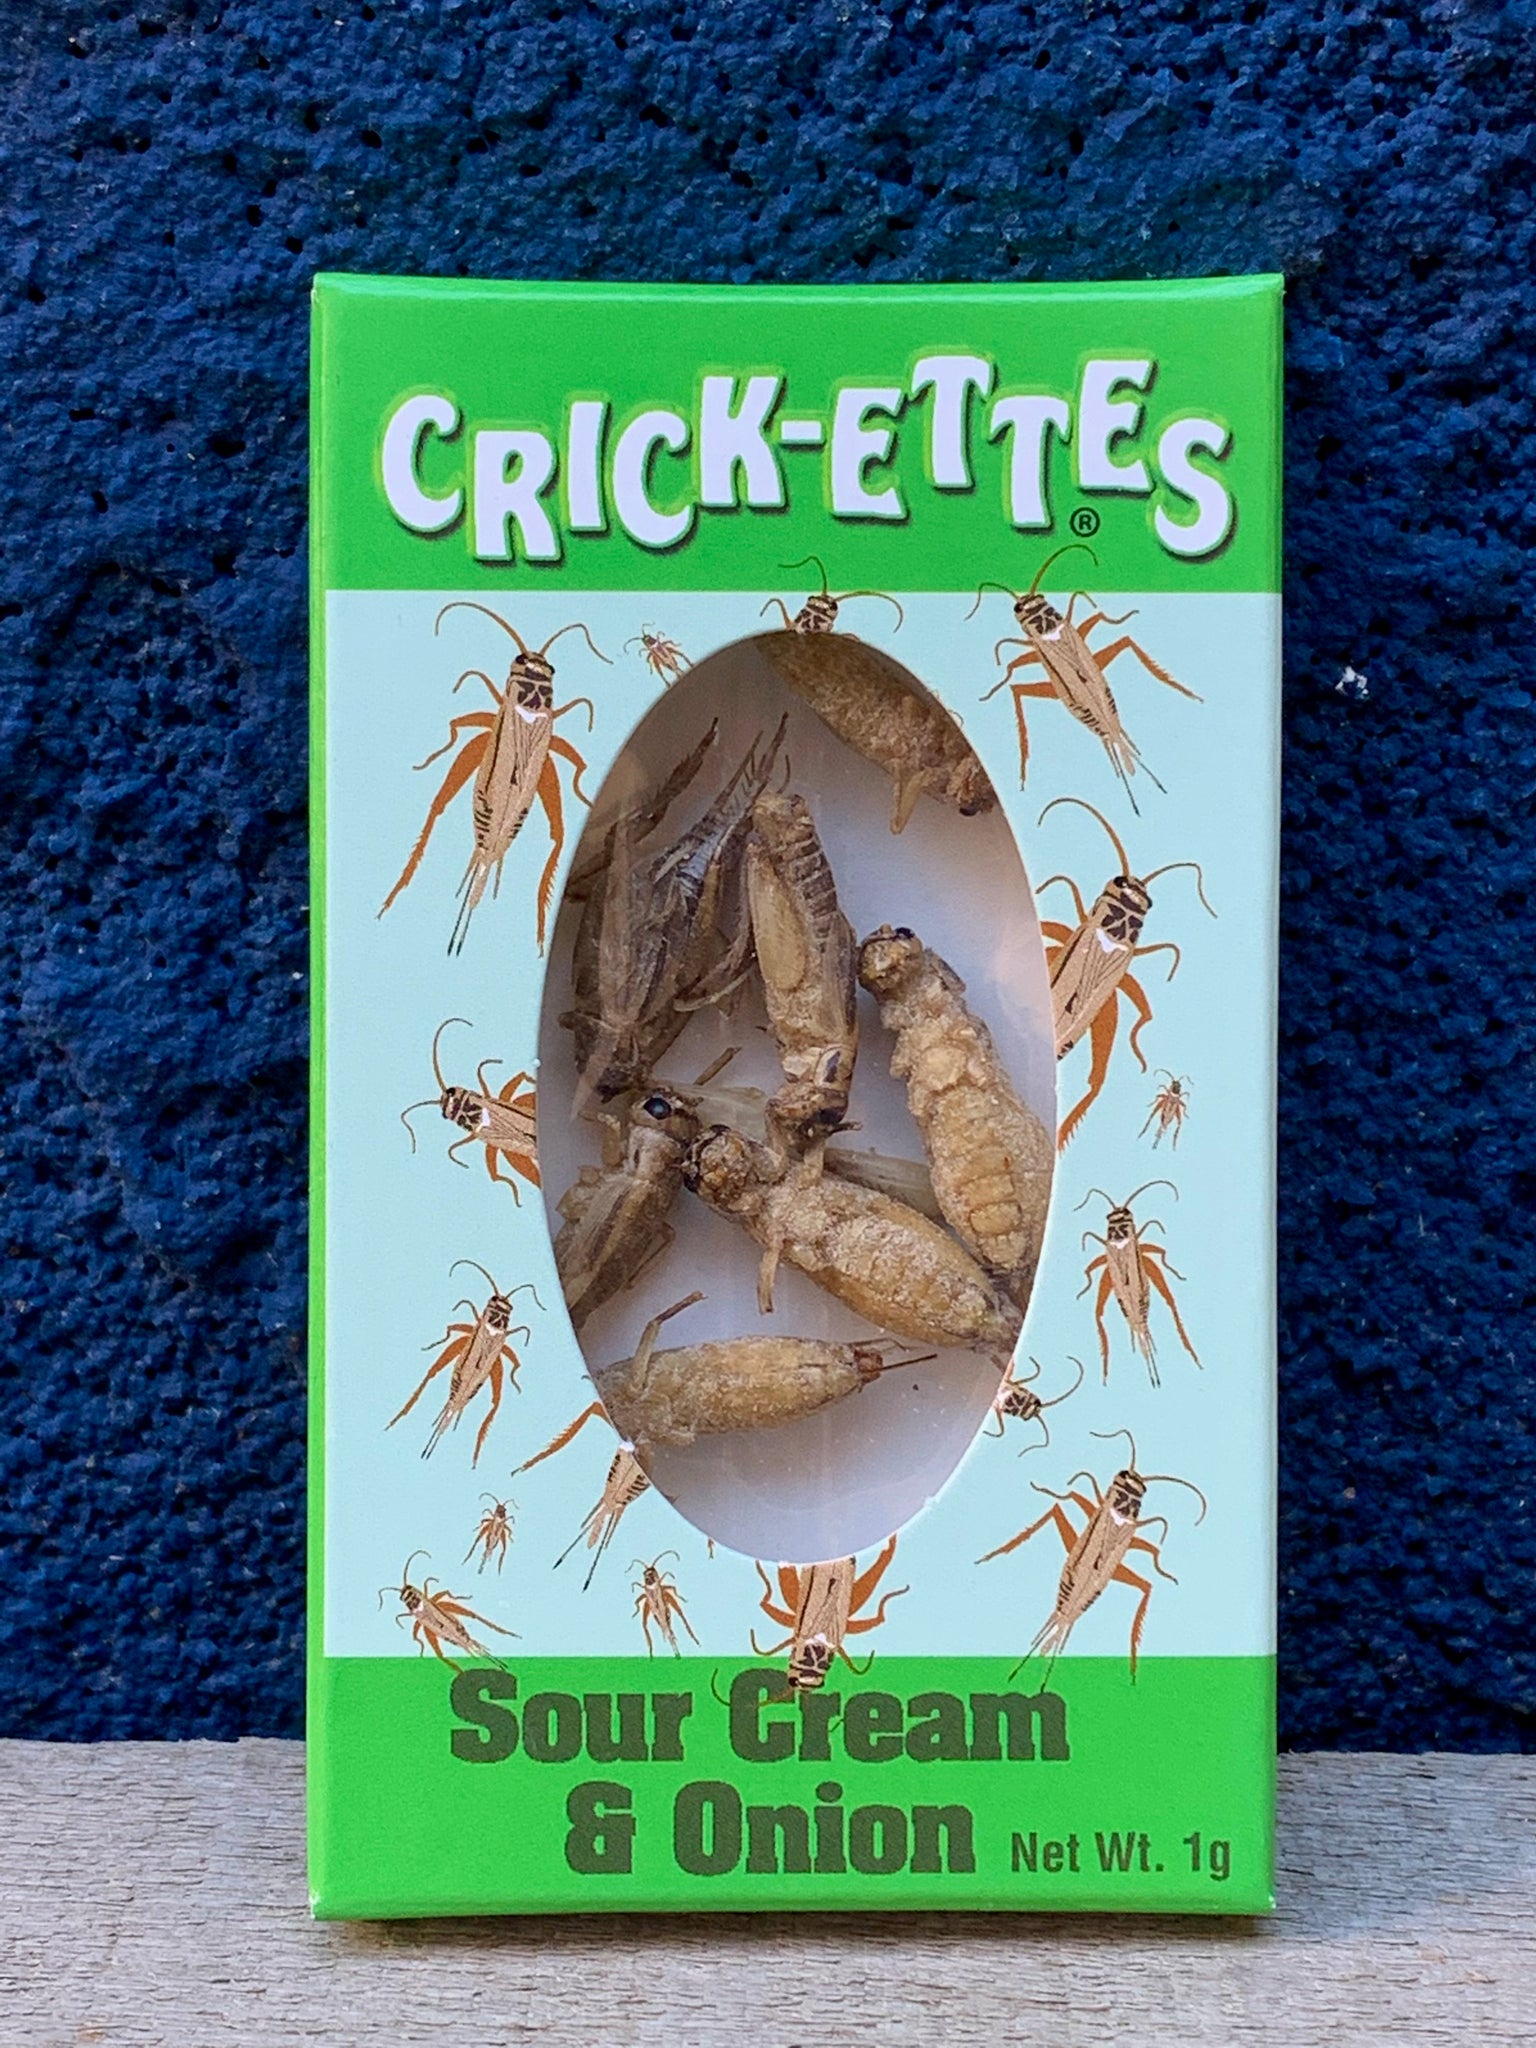 Sour Cream & Onion Crickets, EntoMarket